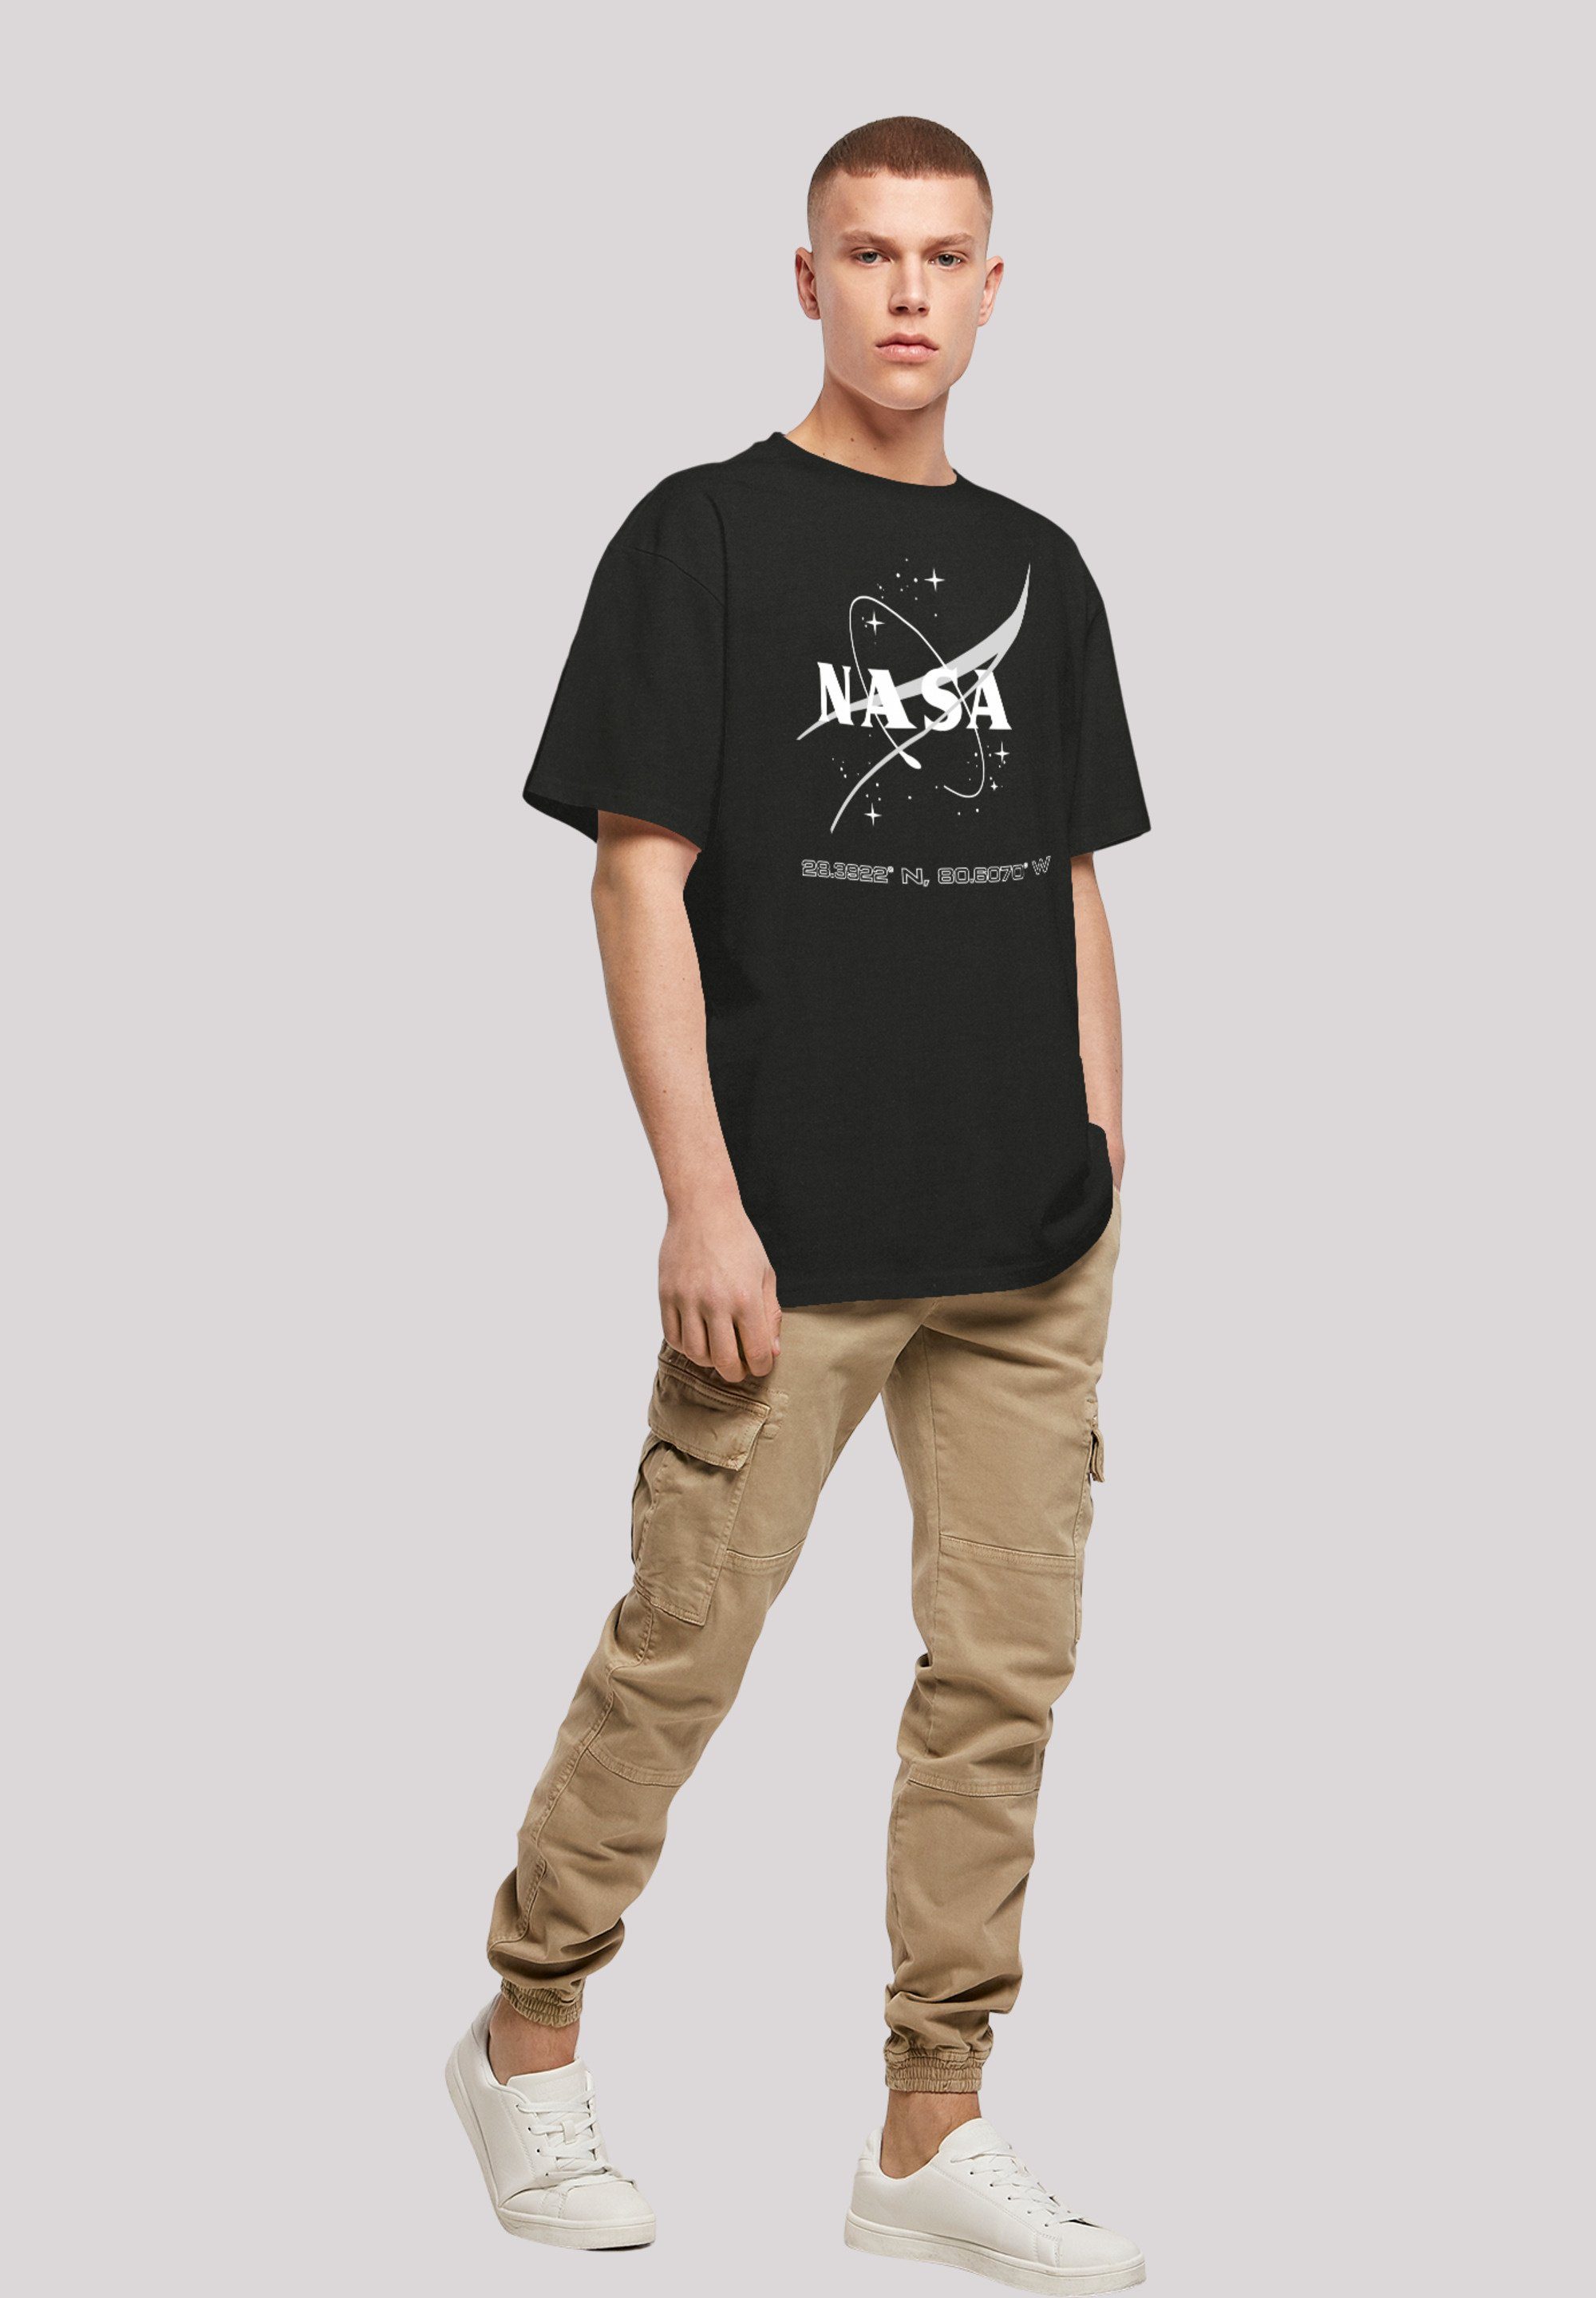 F4NT4STIC T-Shirt Logo FASHION PHIBER schwarz NASA Meatball Print METAVERSE